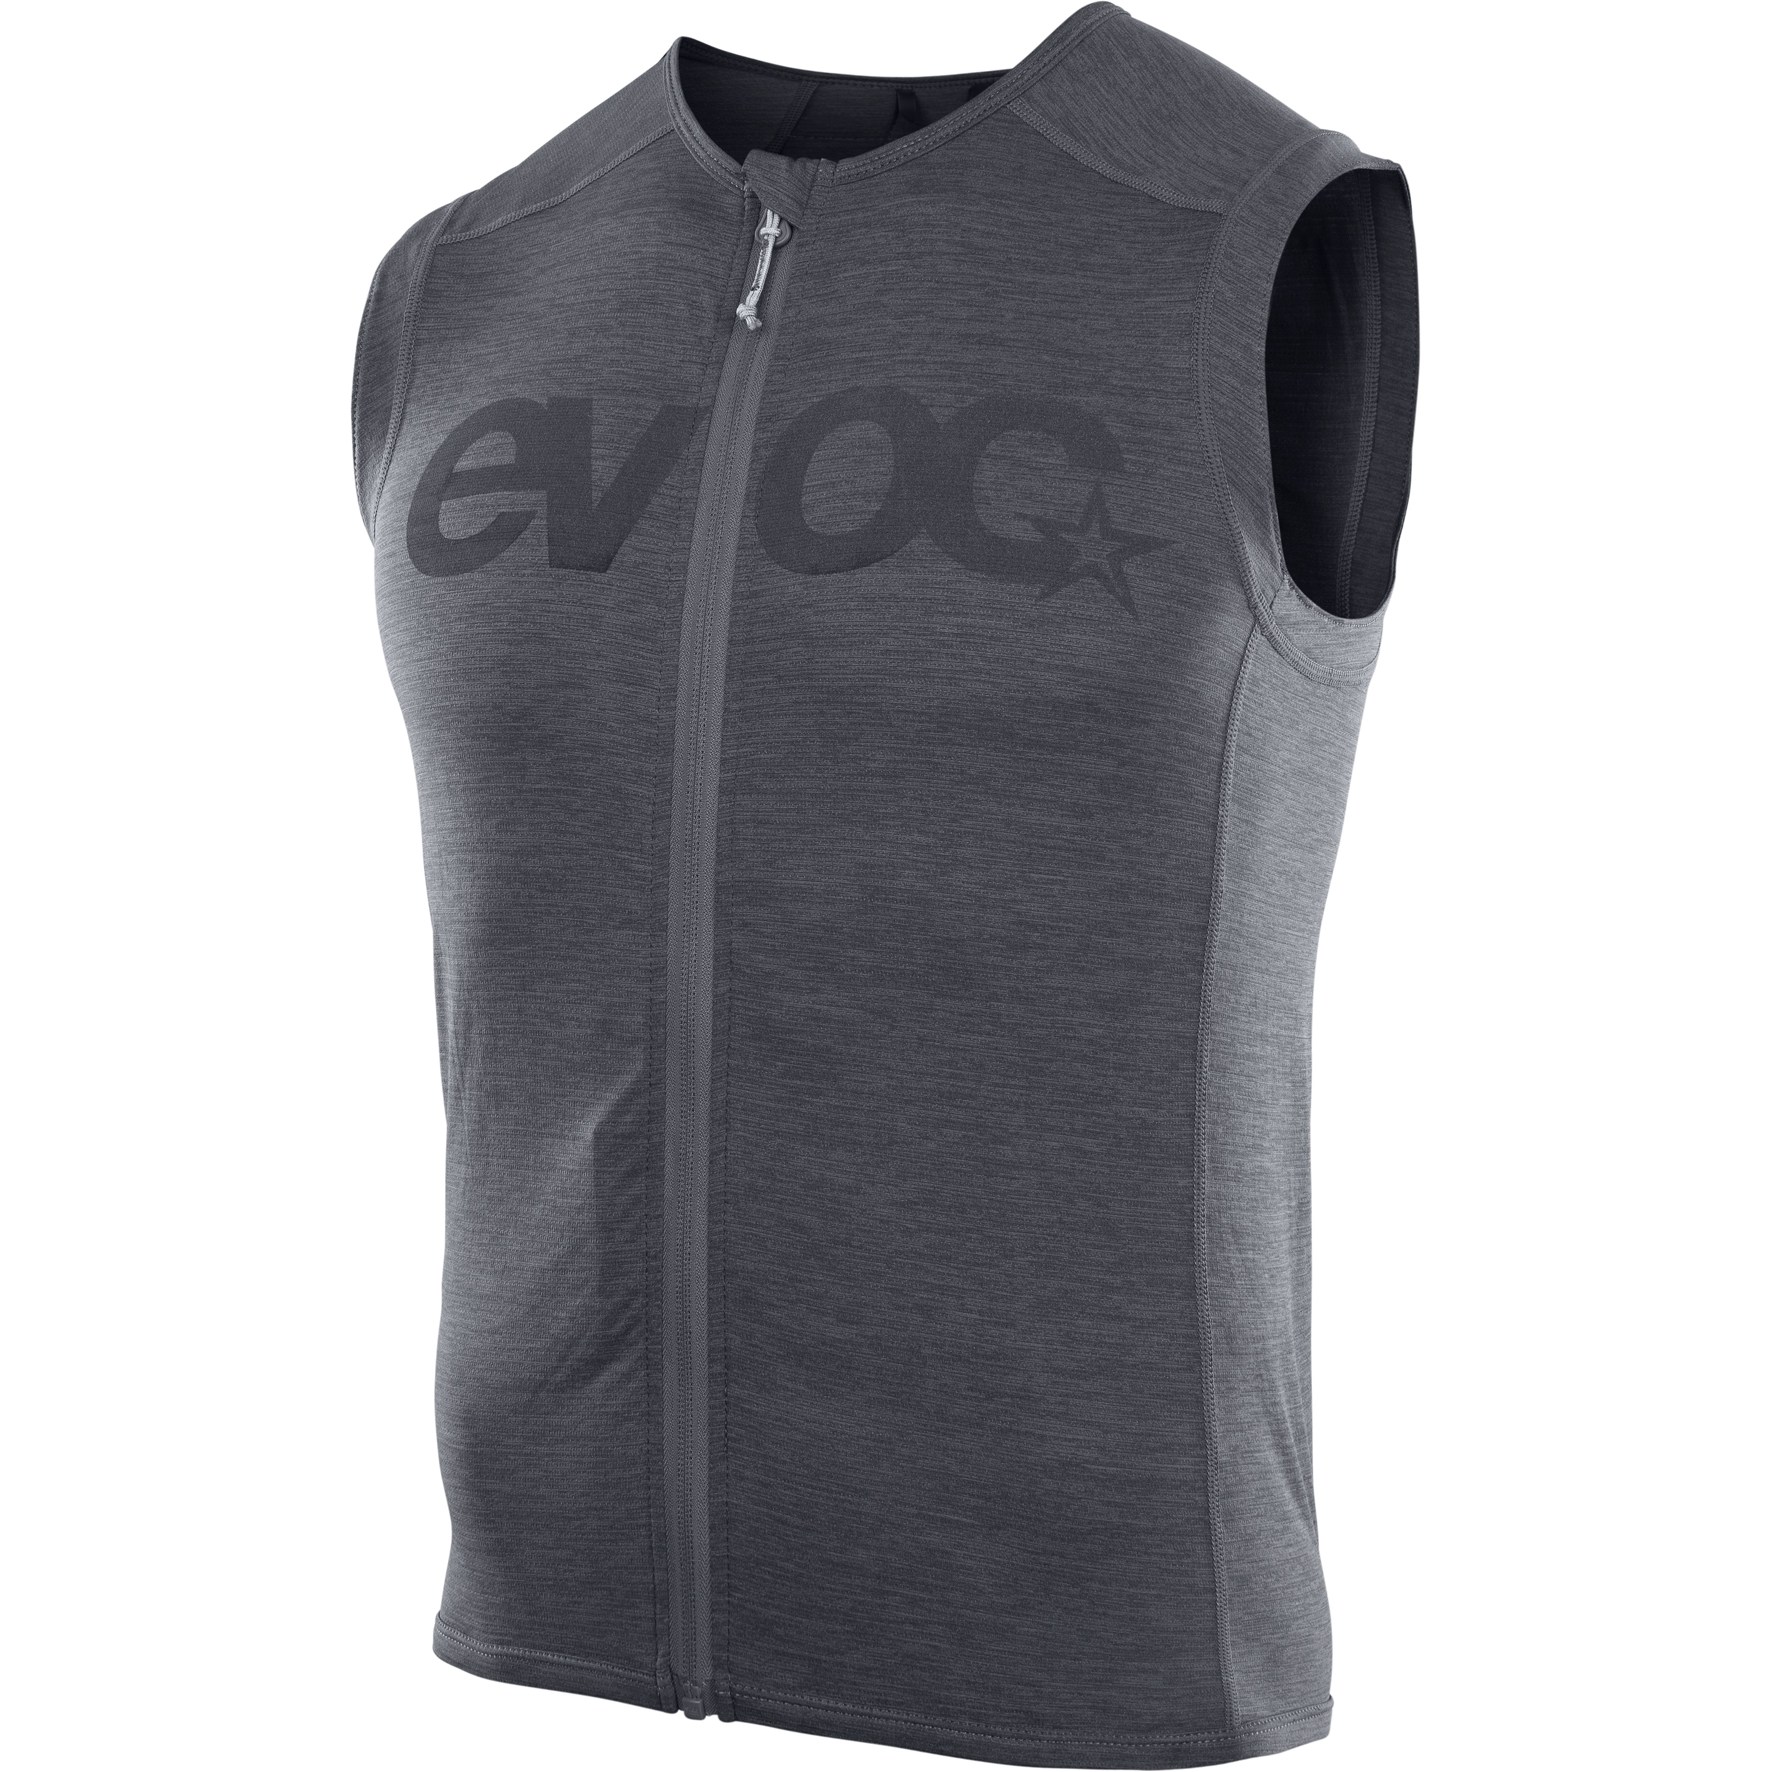 Productfoto van EVOC Protector Vest Bovenlichaam Protector - Carbon Grey